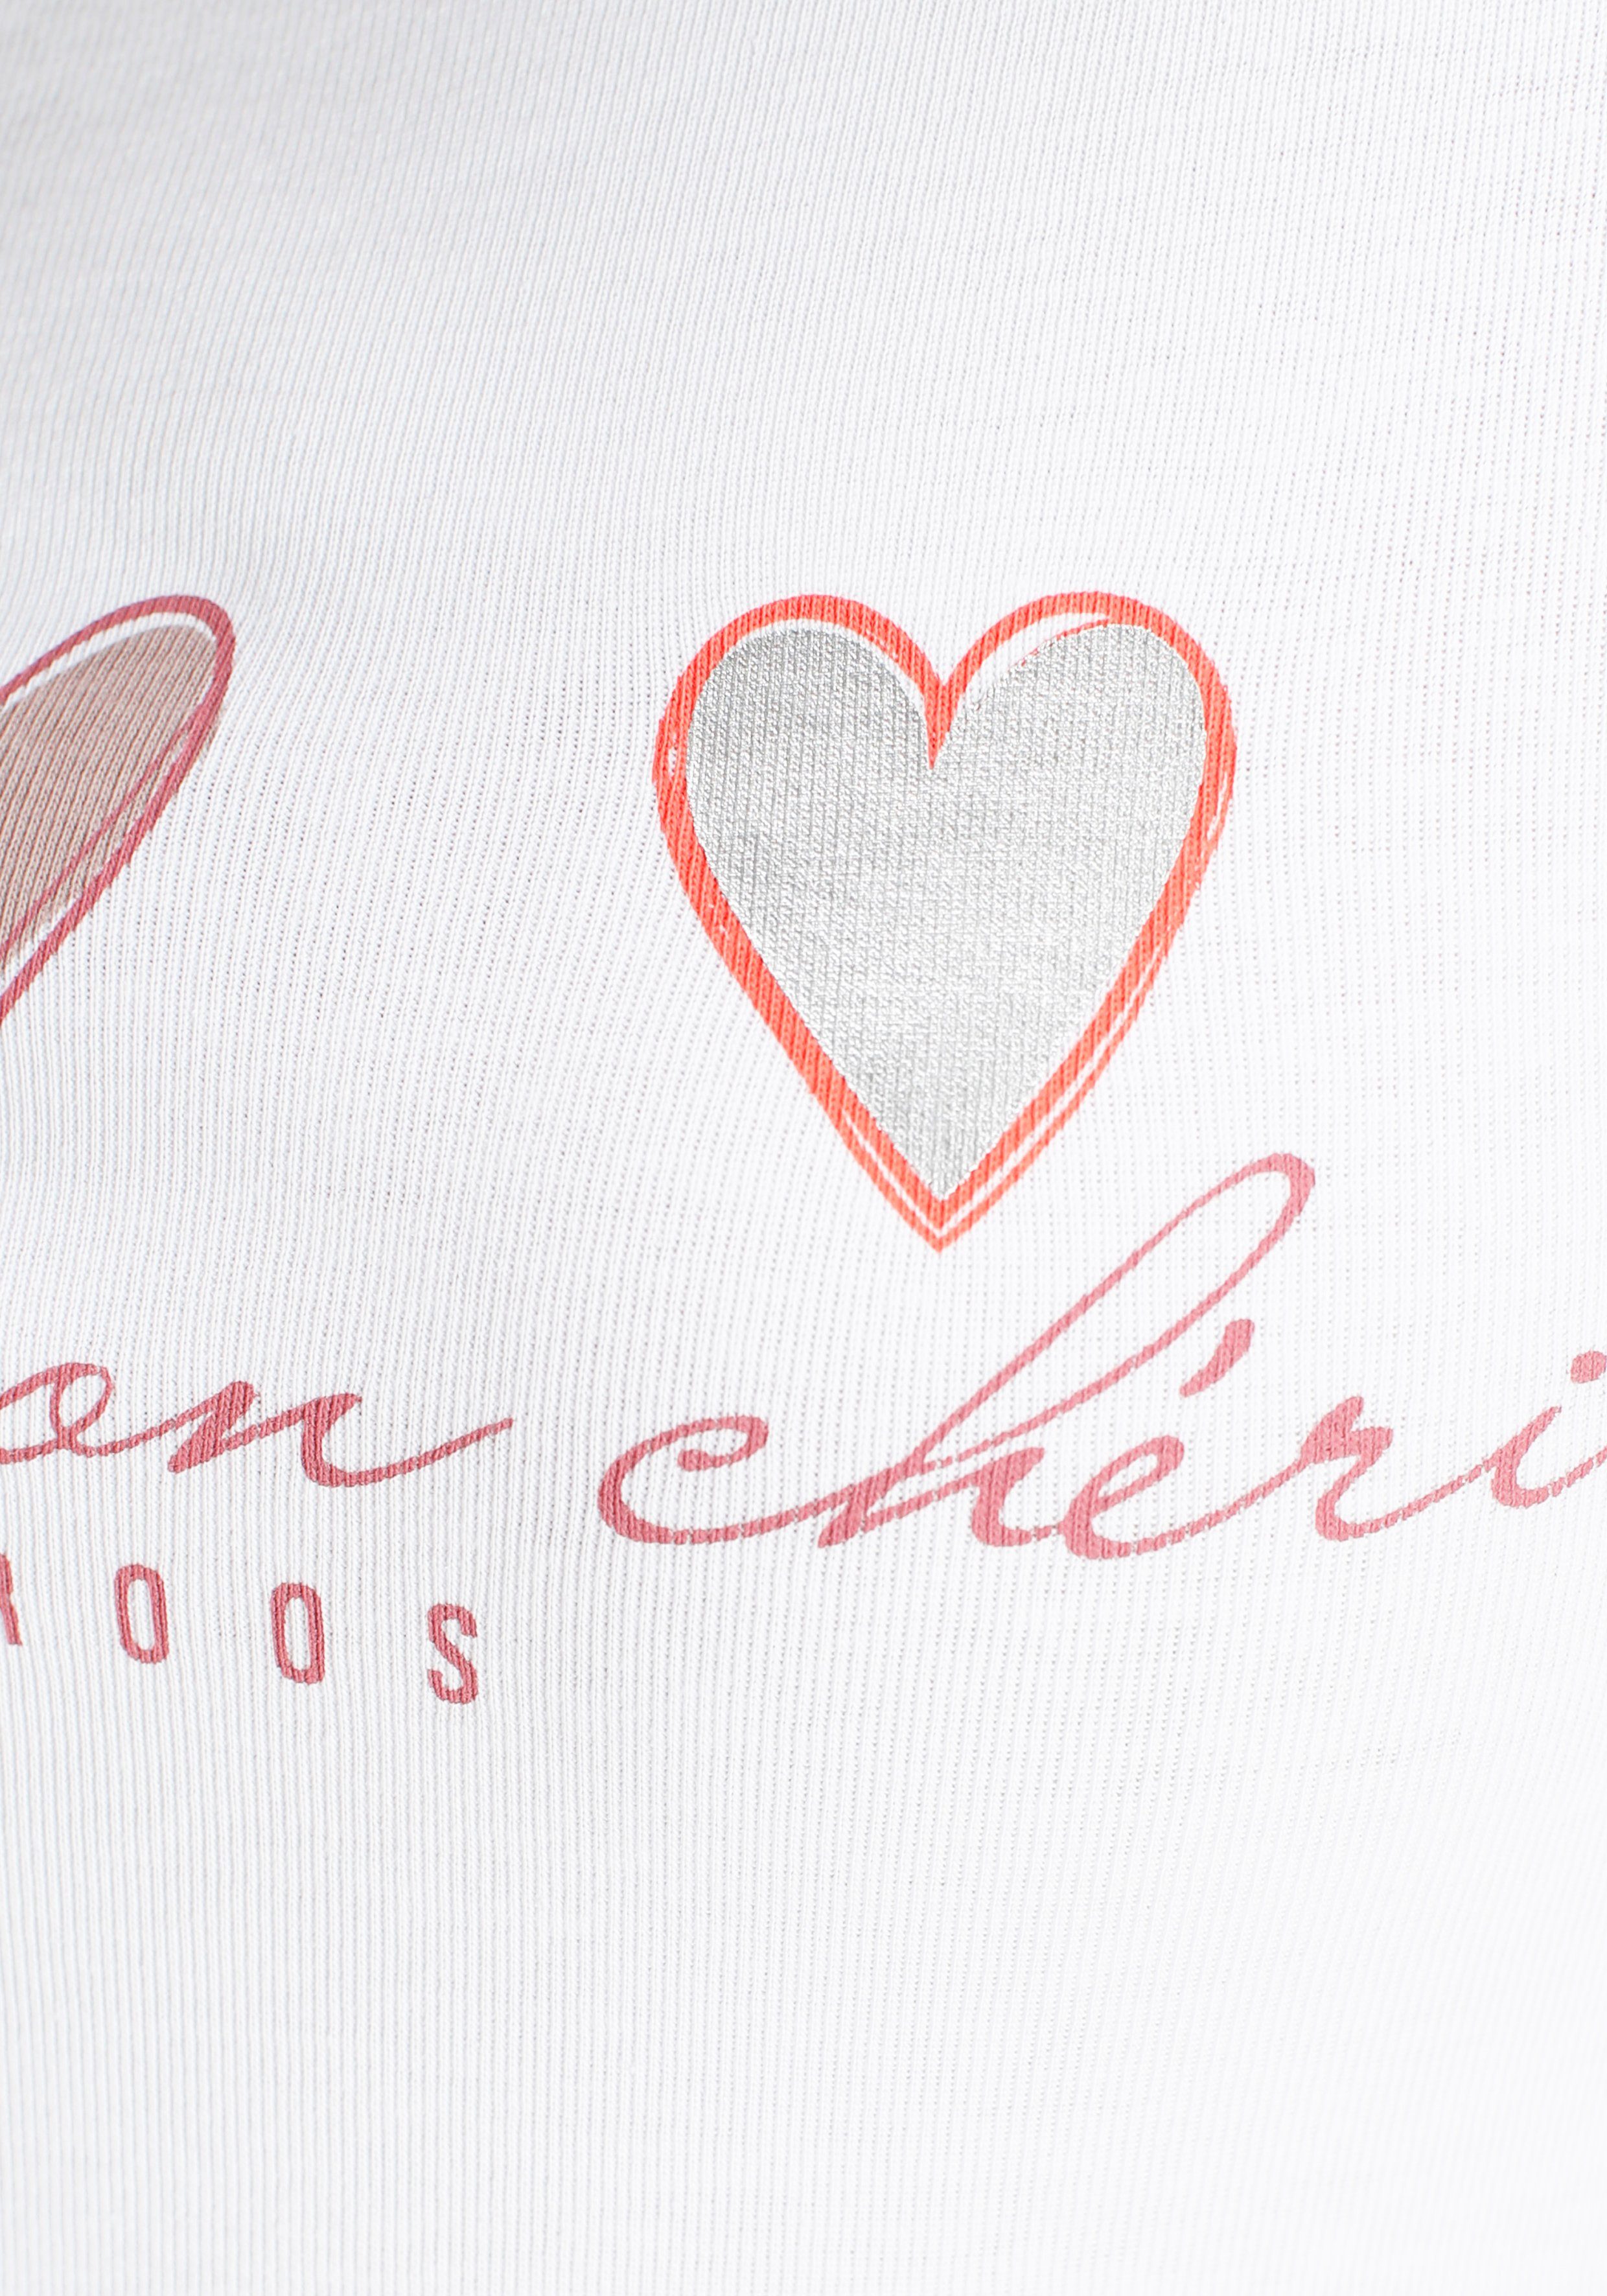 süßen Herz-Logodruck mit weiß KOLLEKTION Longsleeve KangaROOS - NEUE